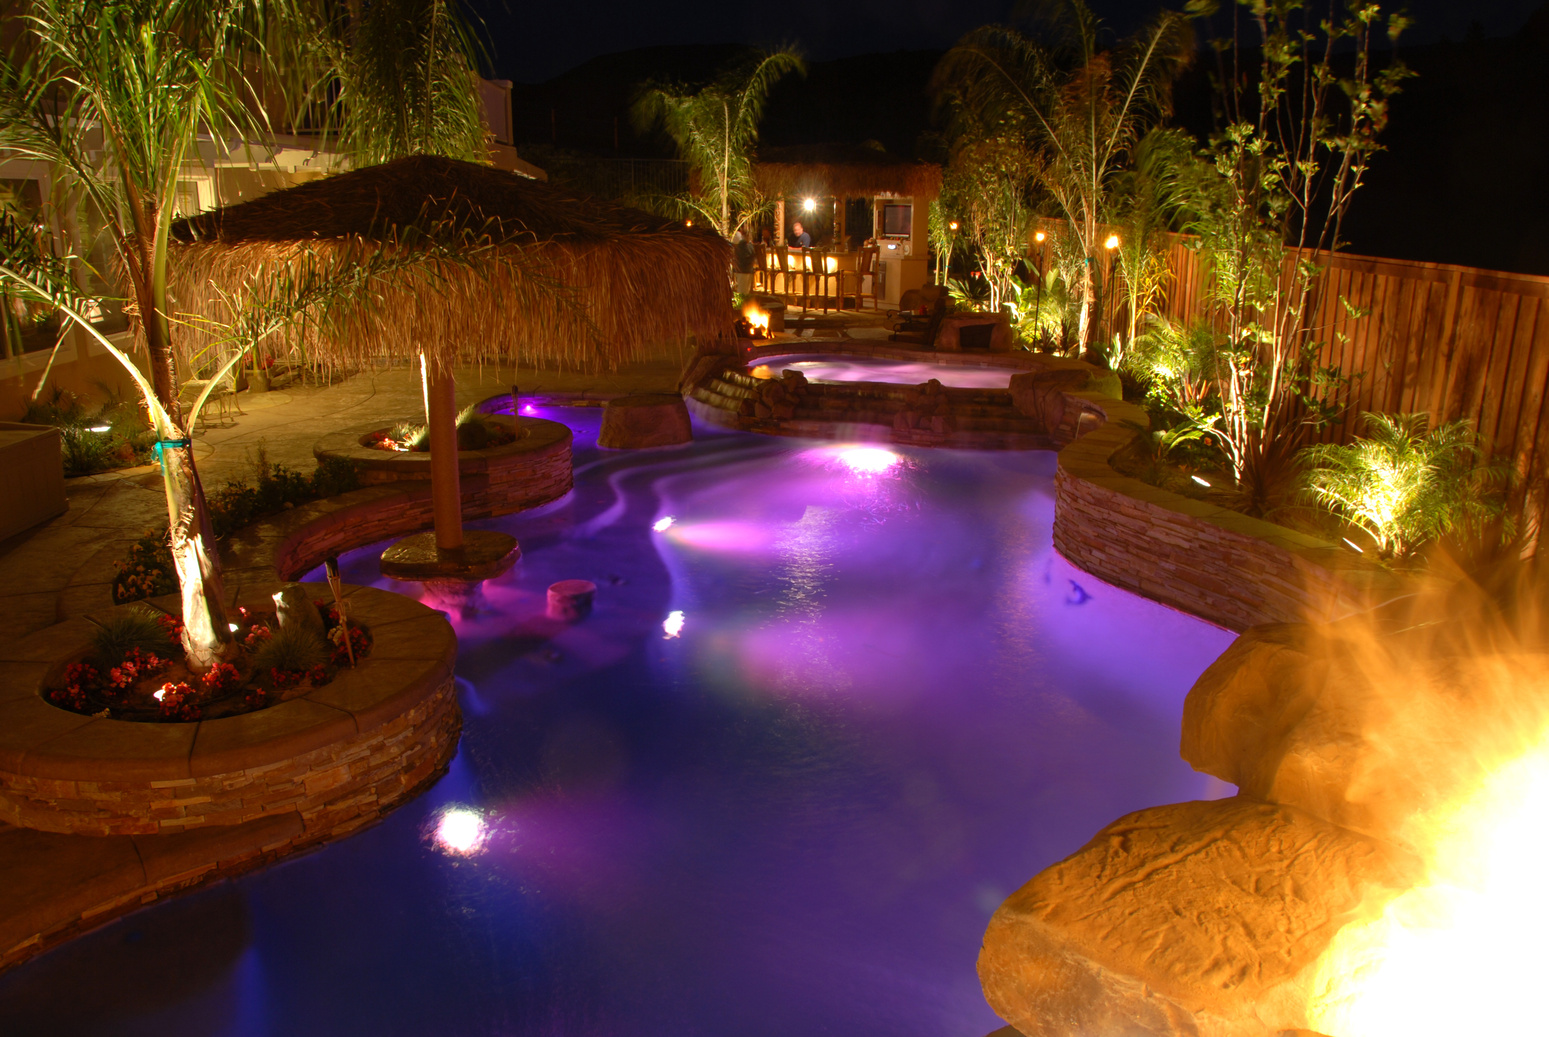 Swimming pool at night lite up purple